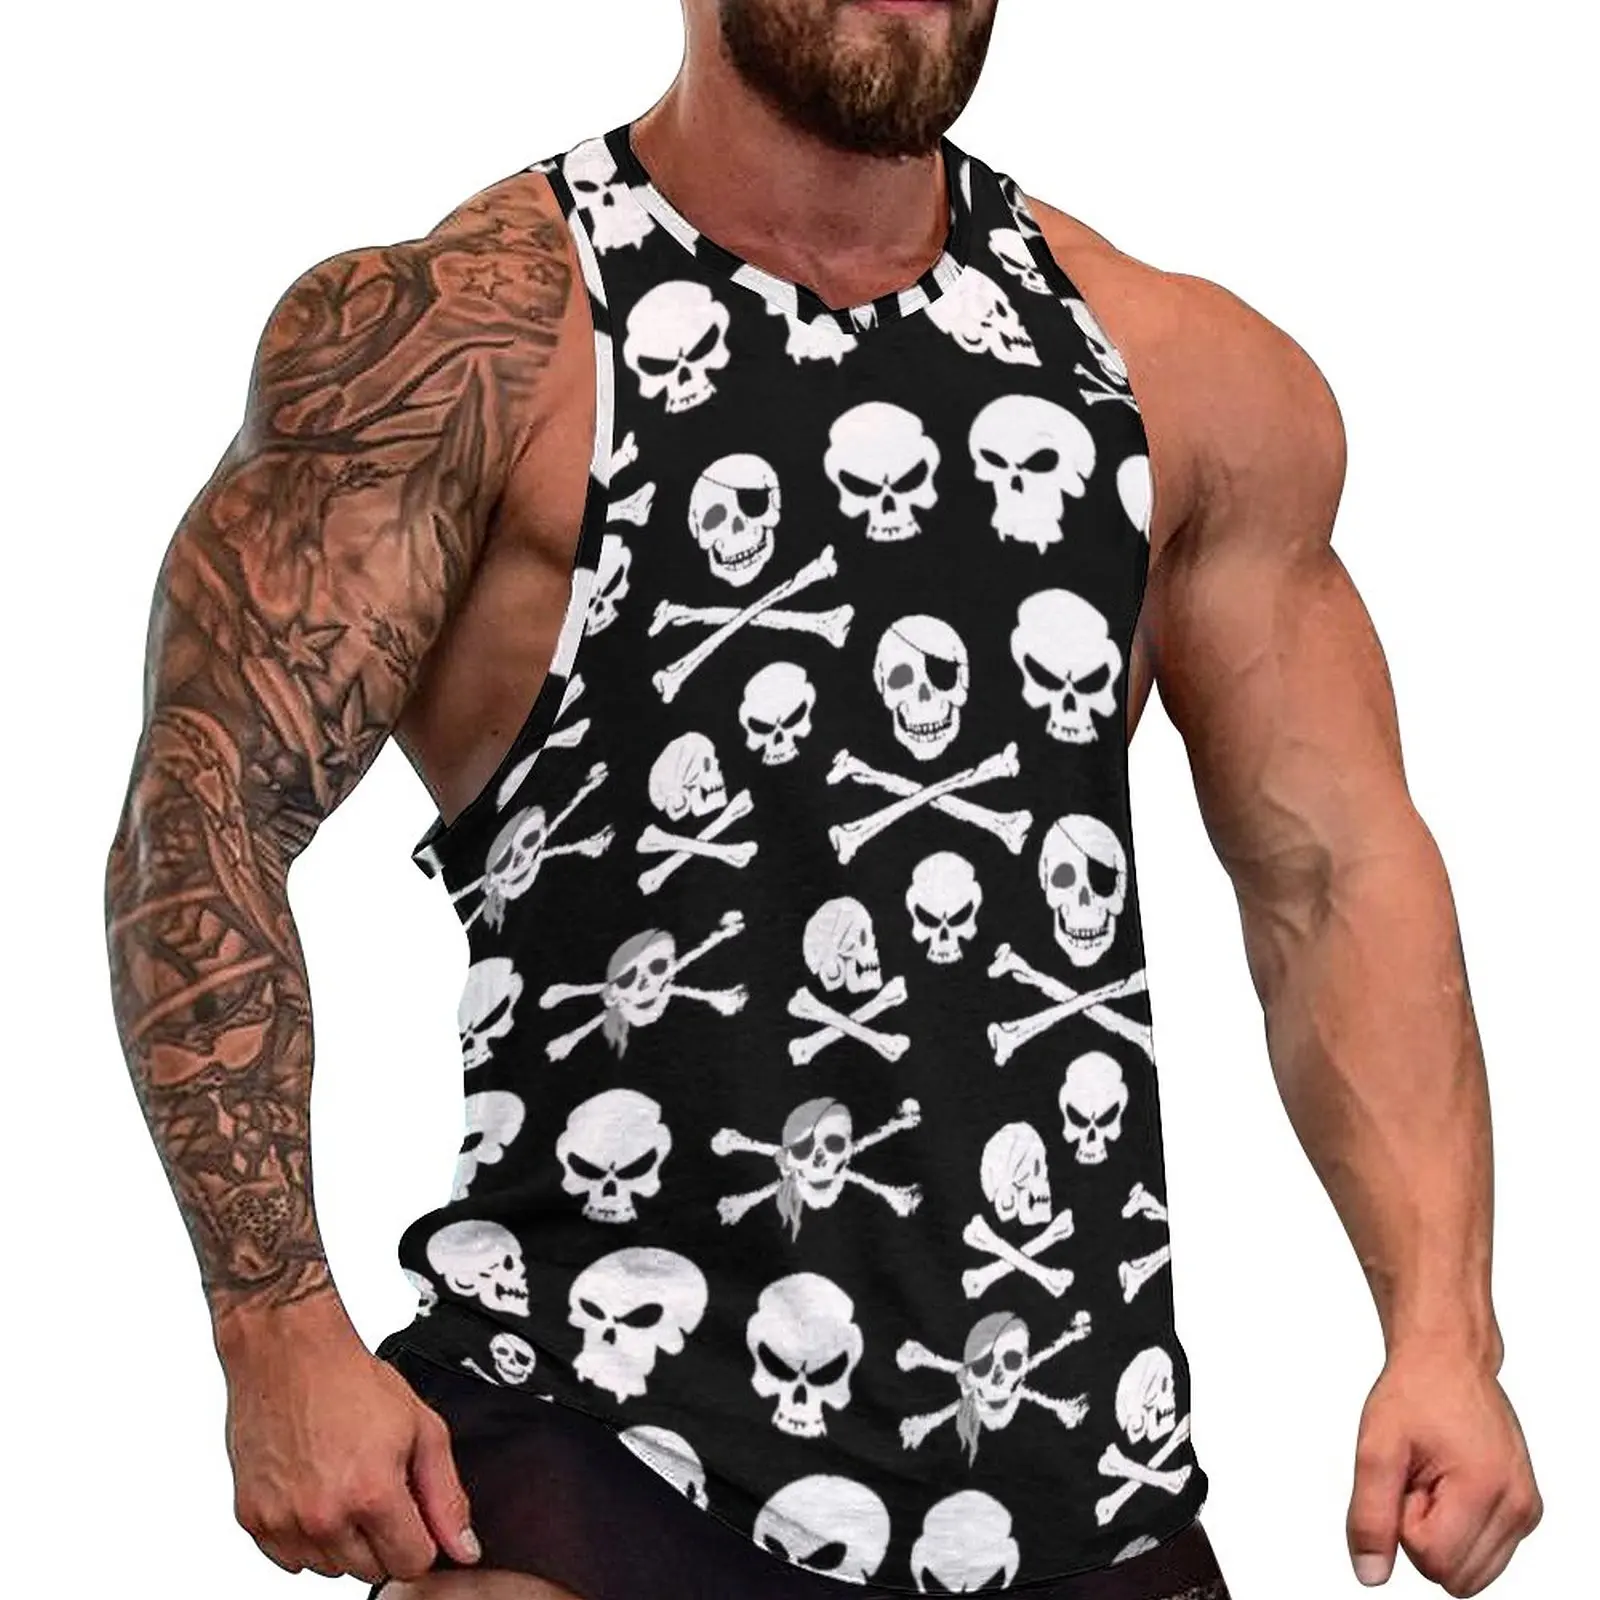 

White Skull Tank Top Man's Pirate Cross Bones Skulls Bodybuilding Oversized Tops Summer Trendy Graphic Sleeveless Vests